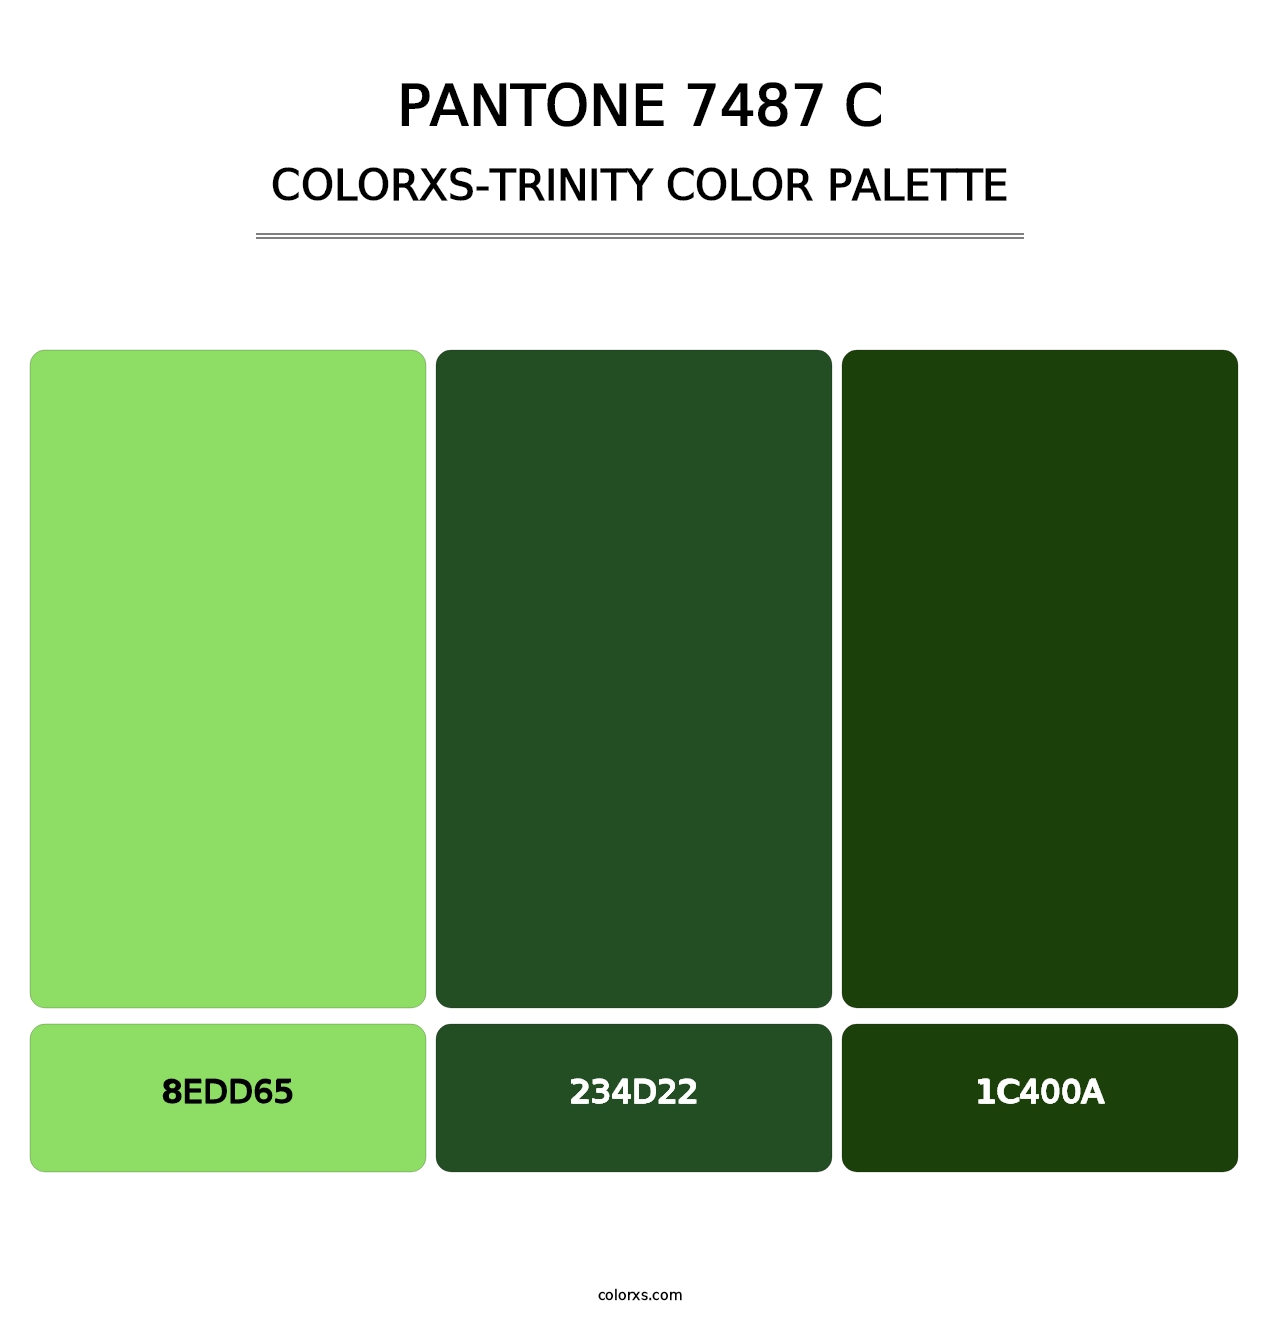 PANTONE 7487 C - Colorxs Trinity Palette